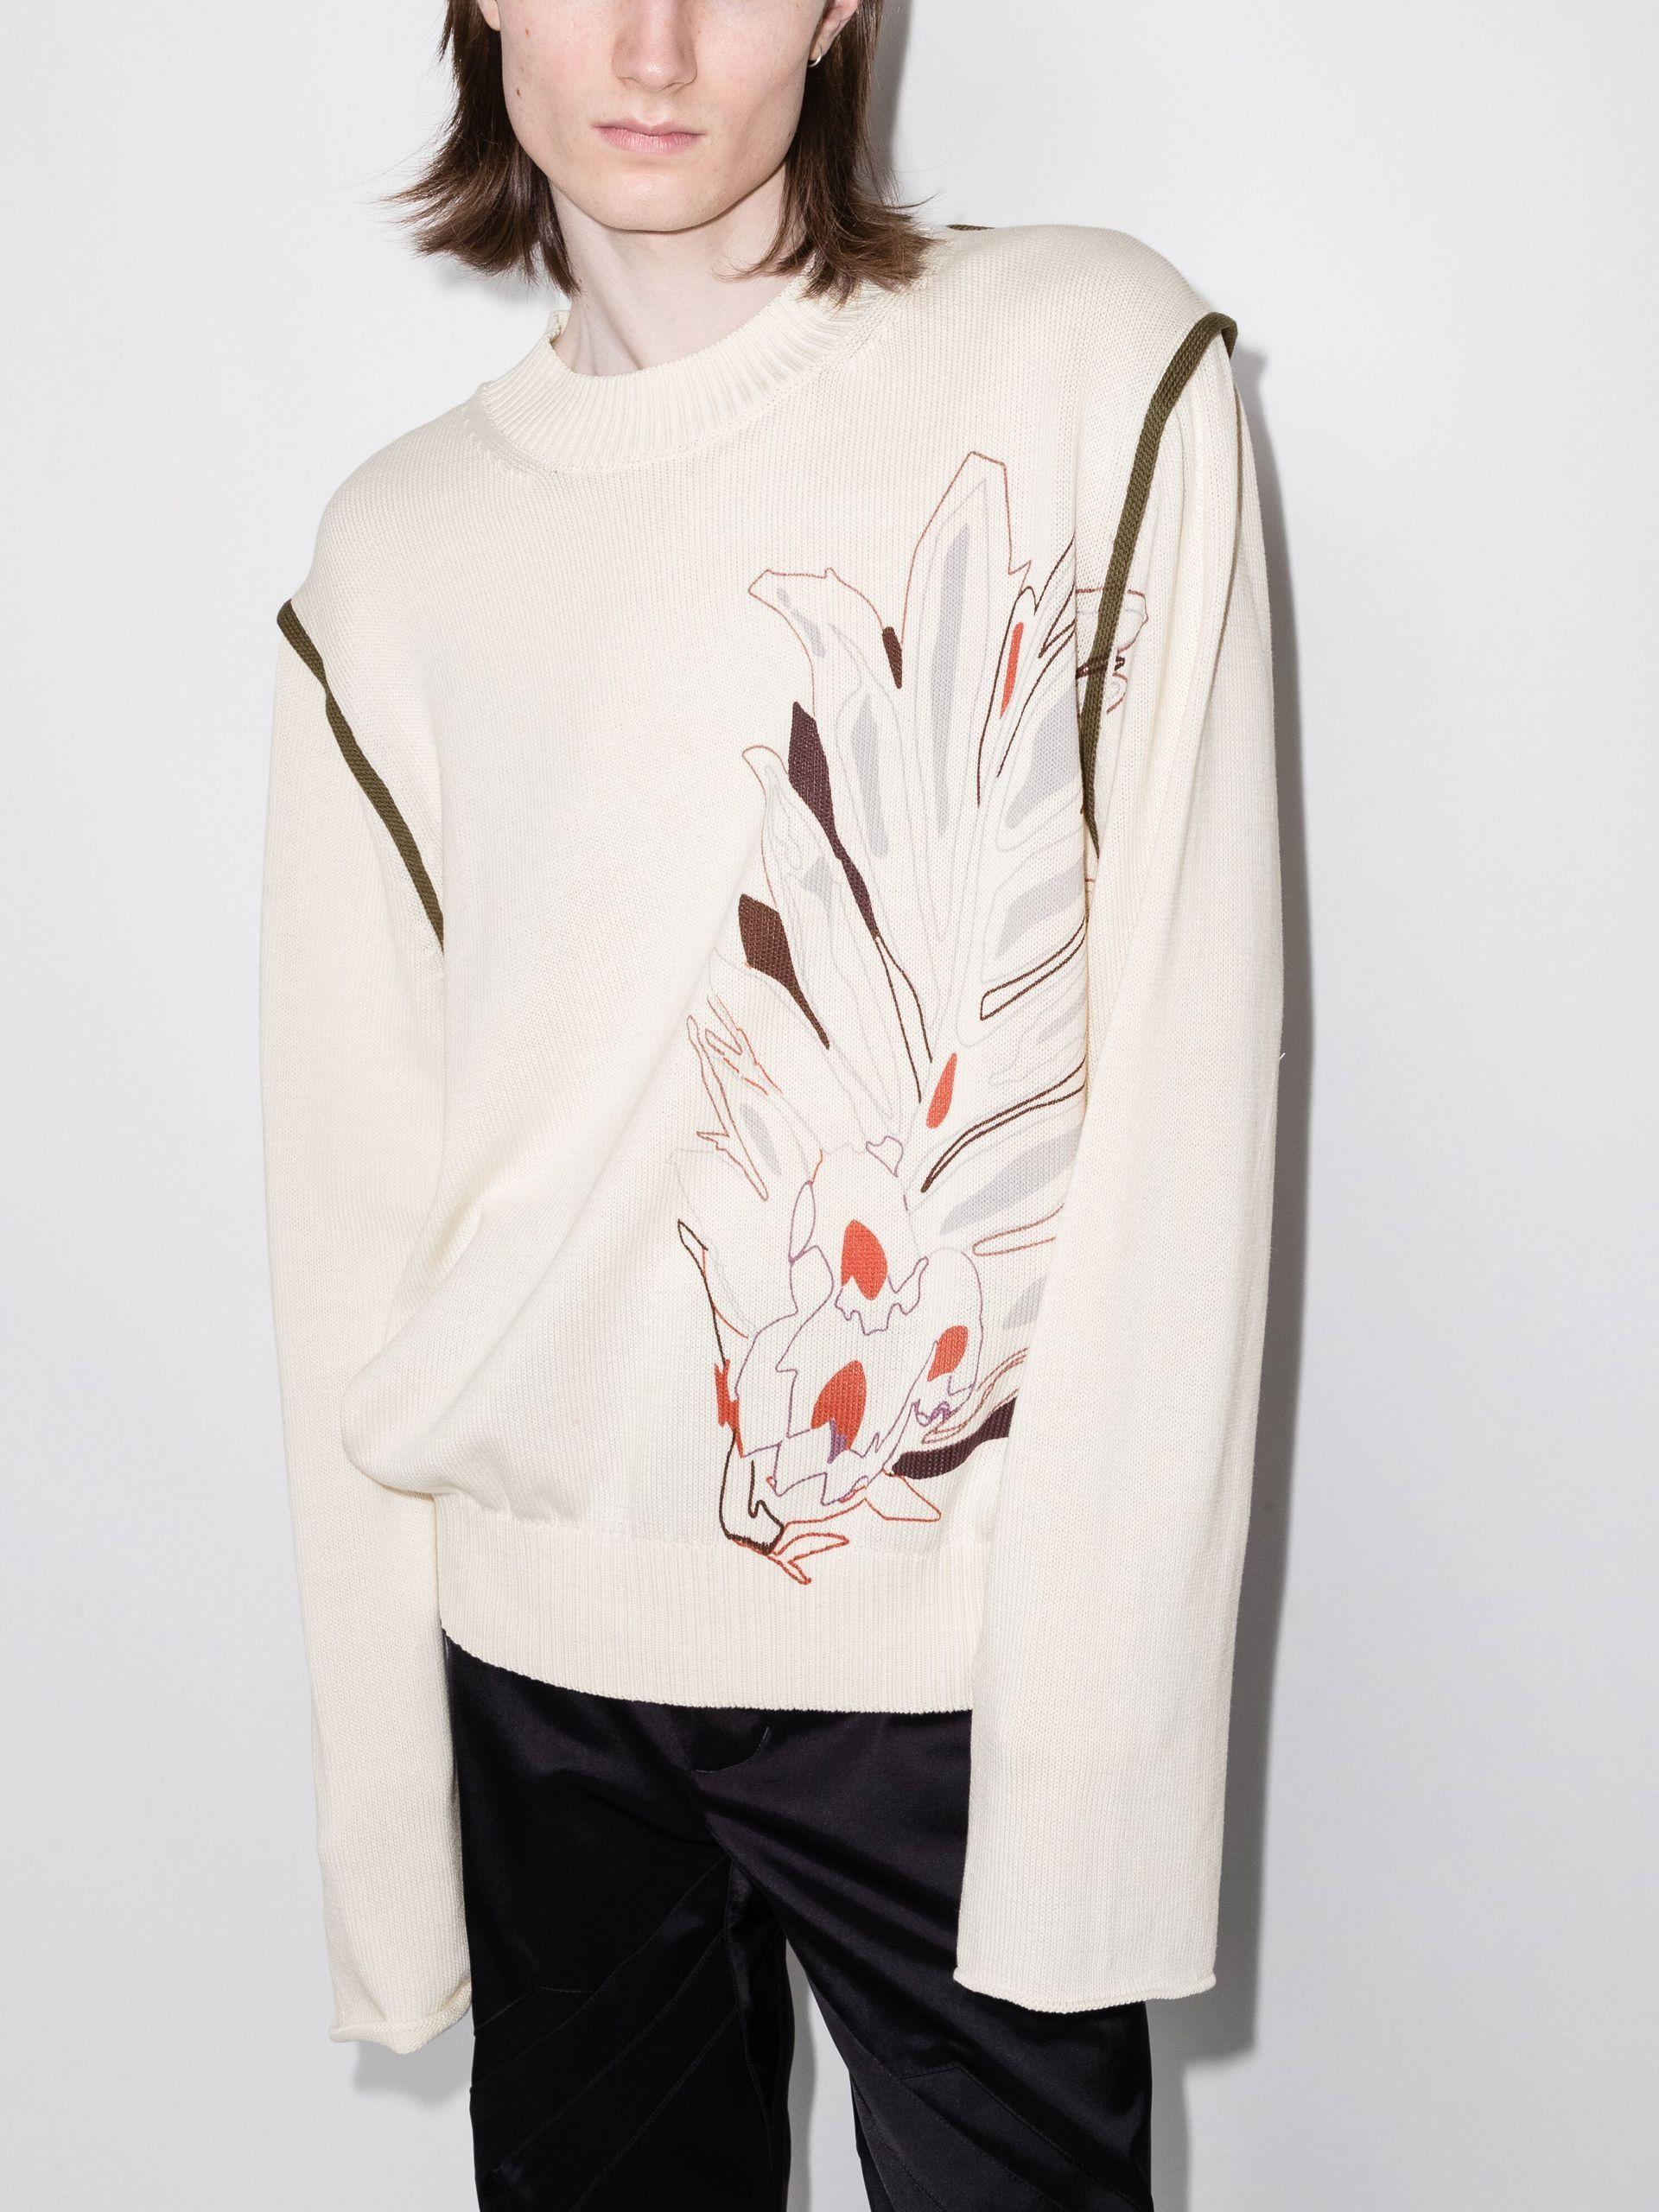 Kiko Kostadinov Future Print Cotton Sweater in Natural for Men | Lyst